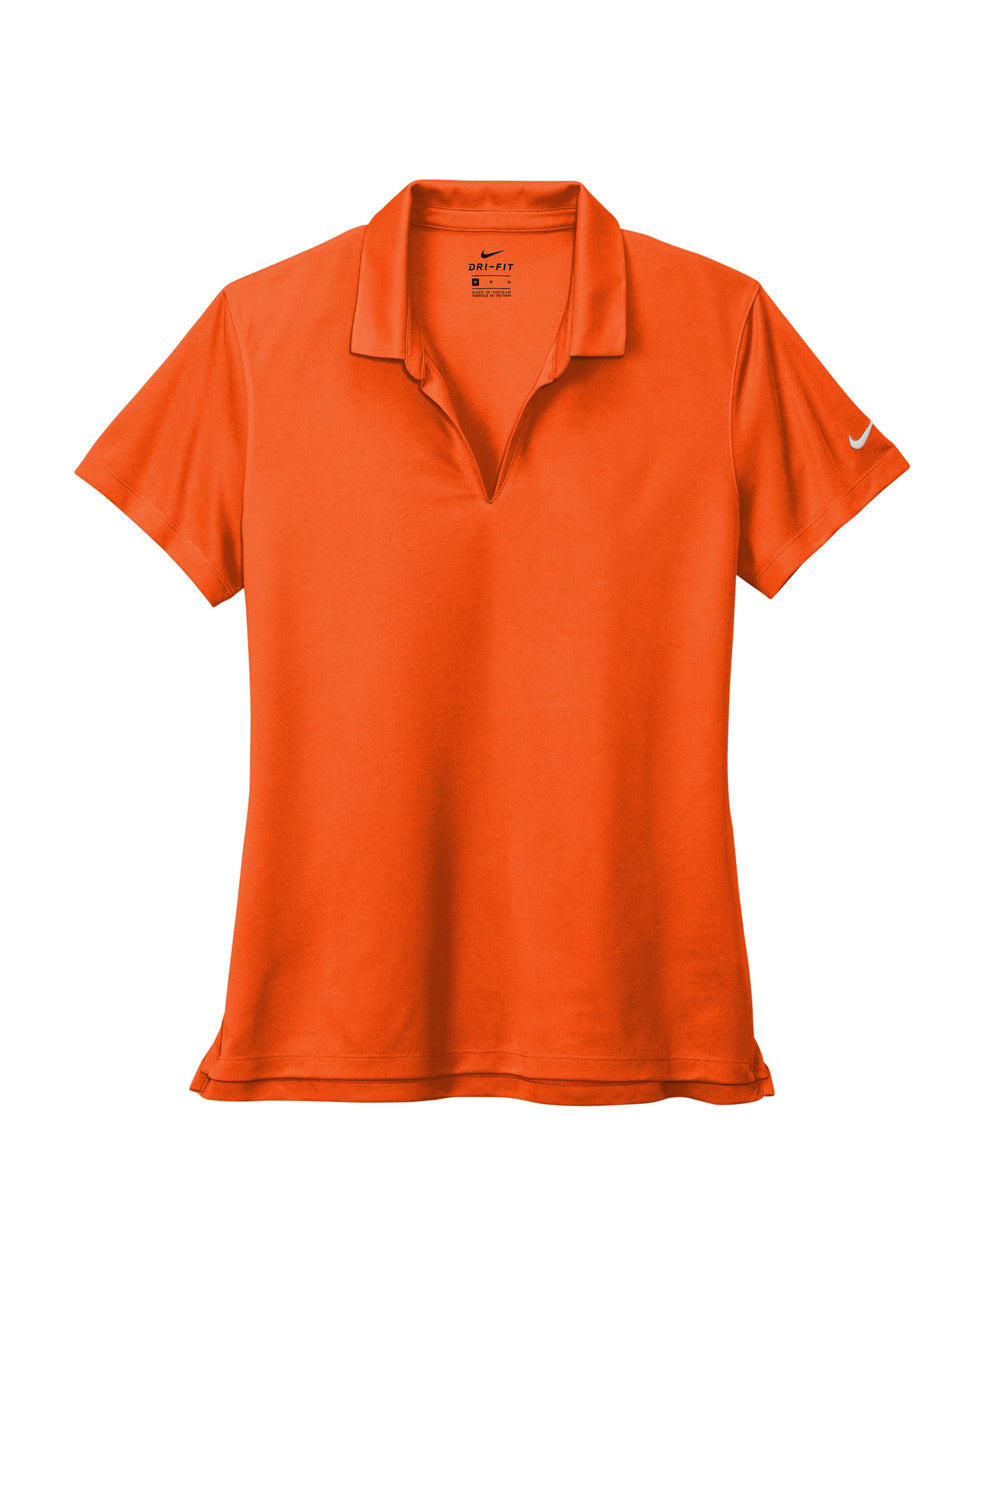 Nike NKDC1991 Womens Dri-Fit Moisture Wicking Micro Pique 2.0 Short Sleeve Polo Shirt Brilliant Orange Flat Front